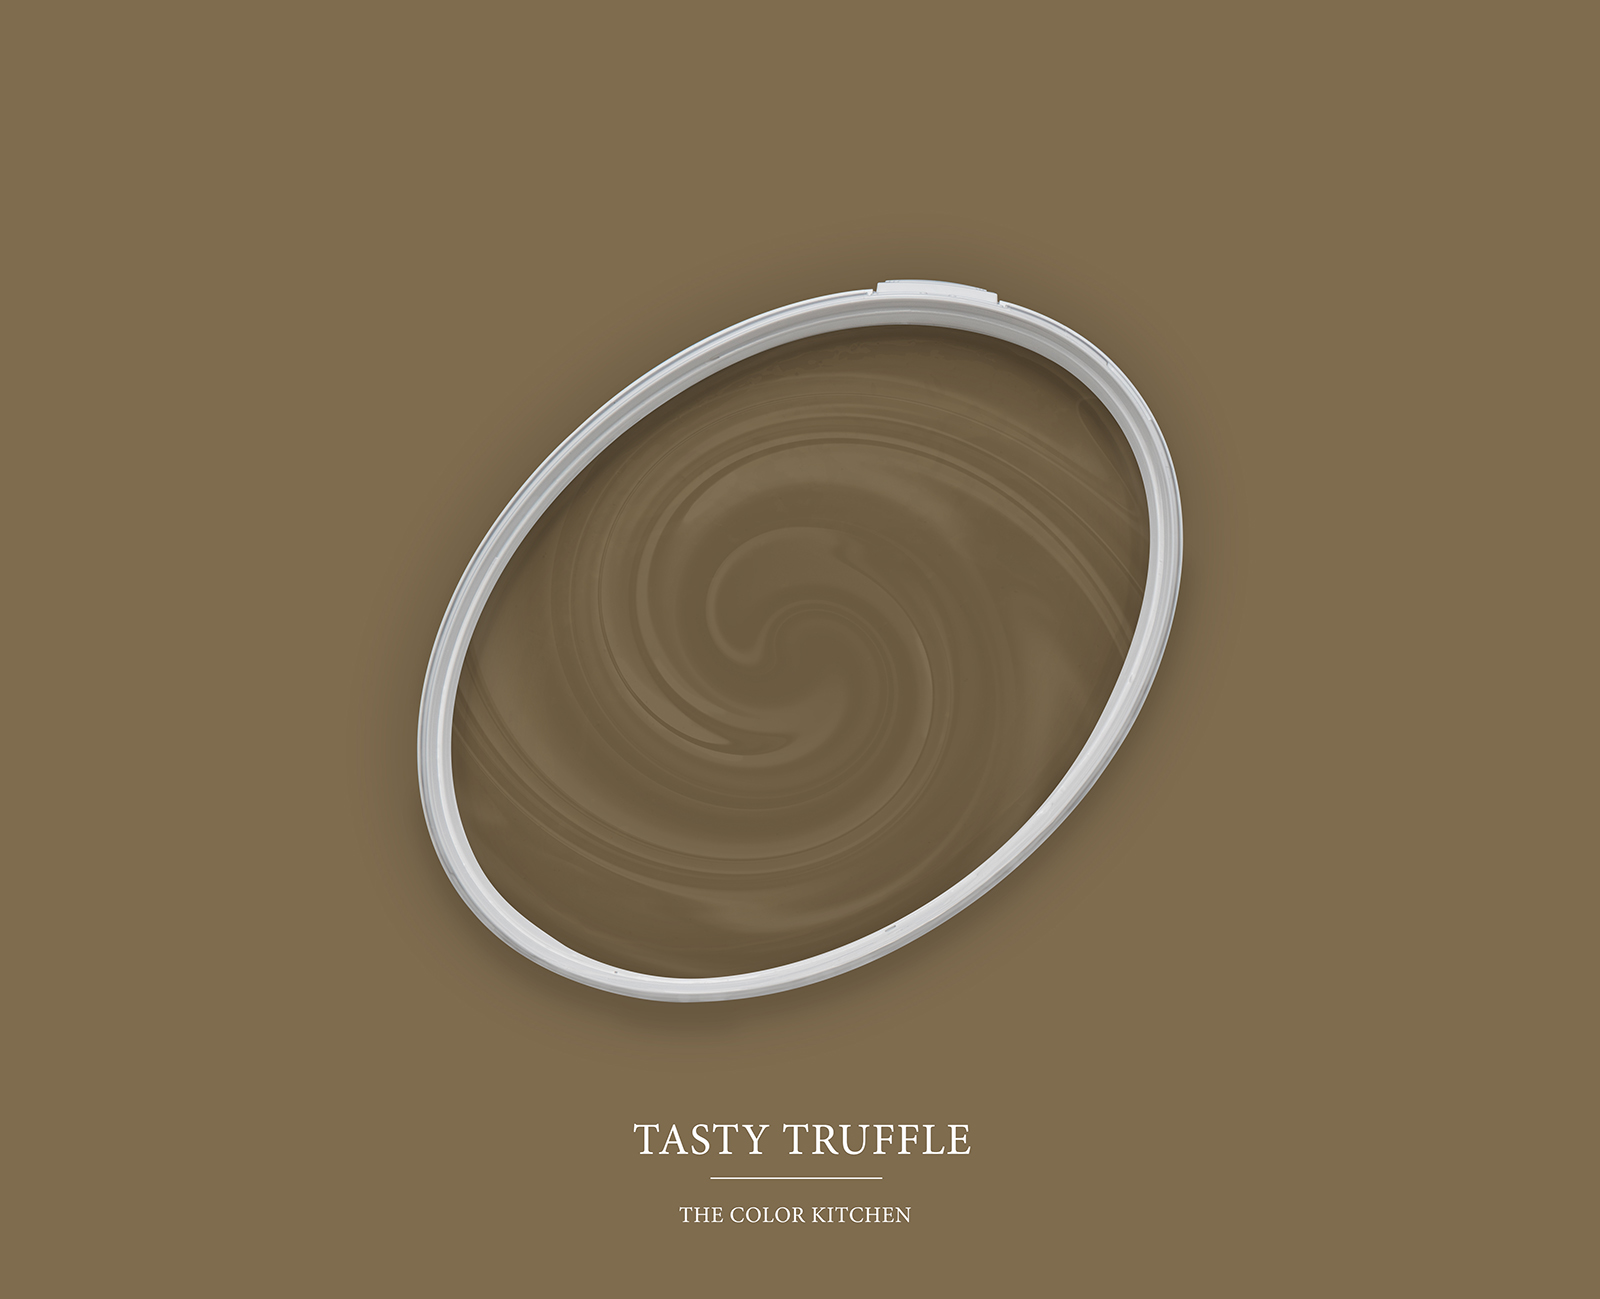         Wandfarbe in tiefem Braun »Tasty Truffle« TCK6014 – 2,5 Liter
    